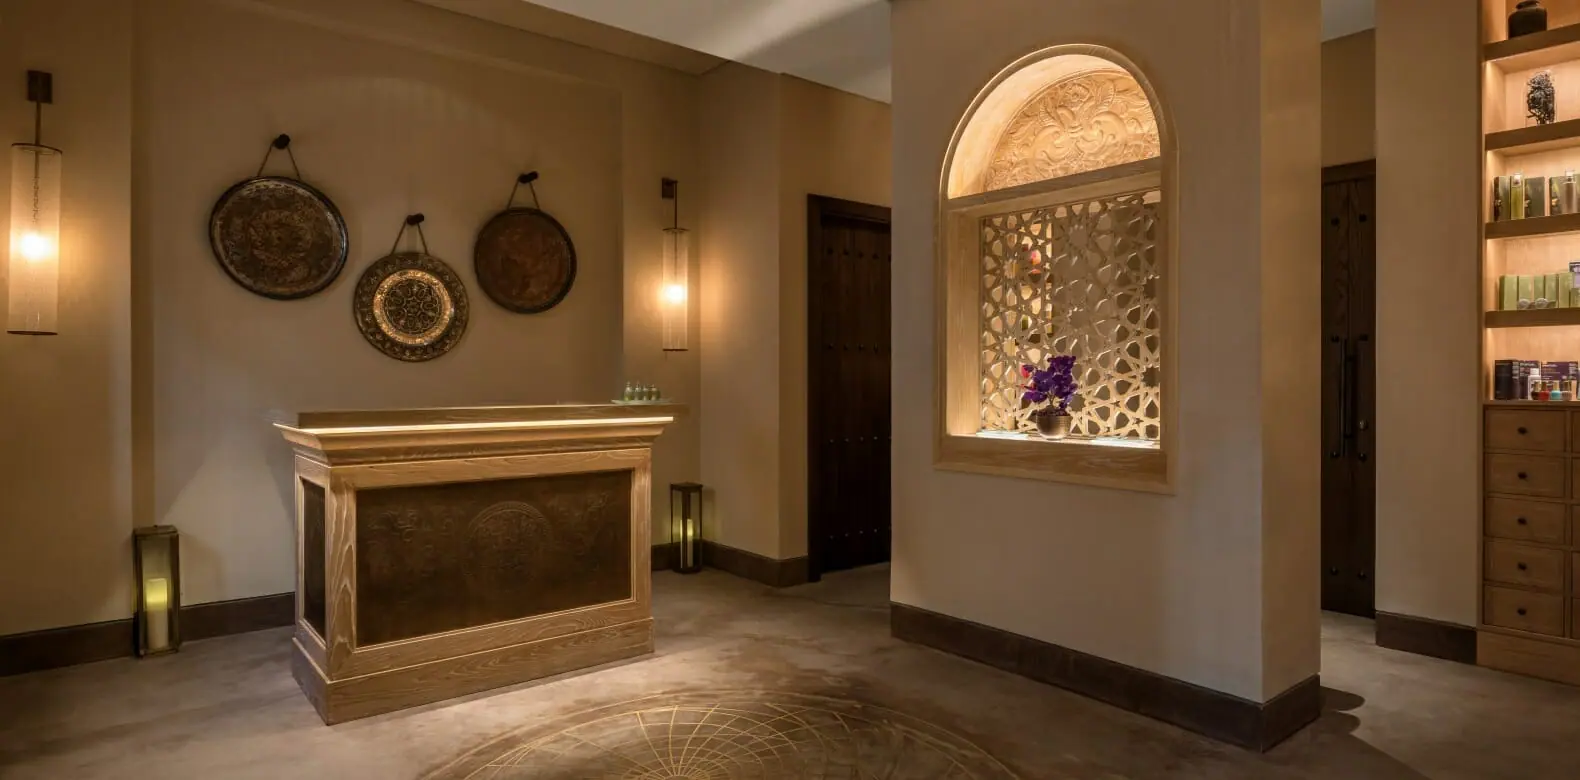 Five Star Hotels in Sharjah| Luxury Hotels in UAE | The Female Spa | The Chedi Al Bait